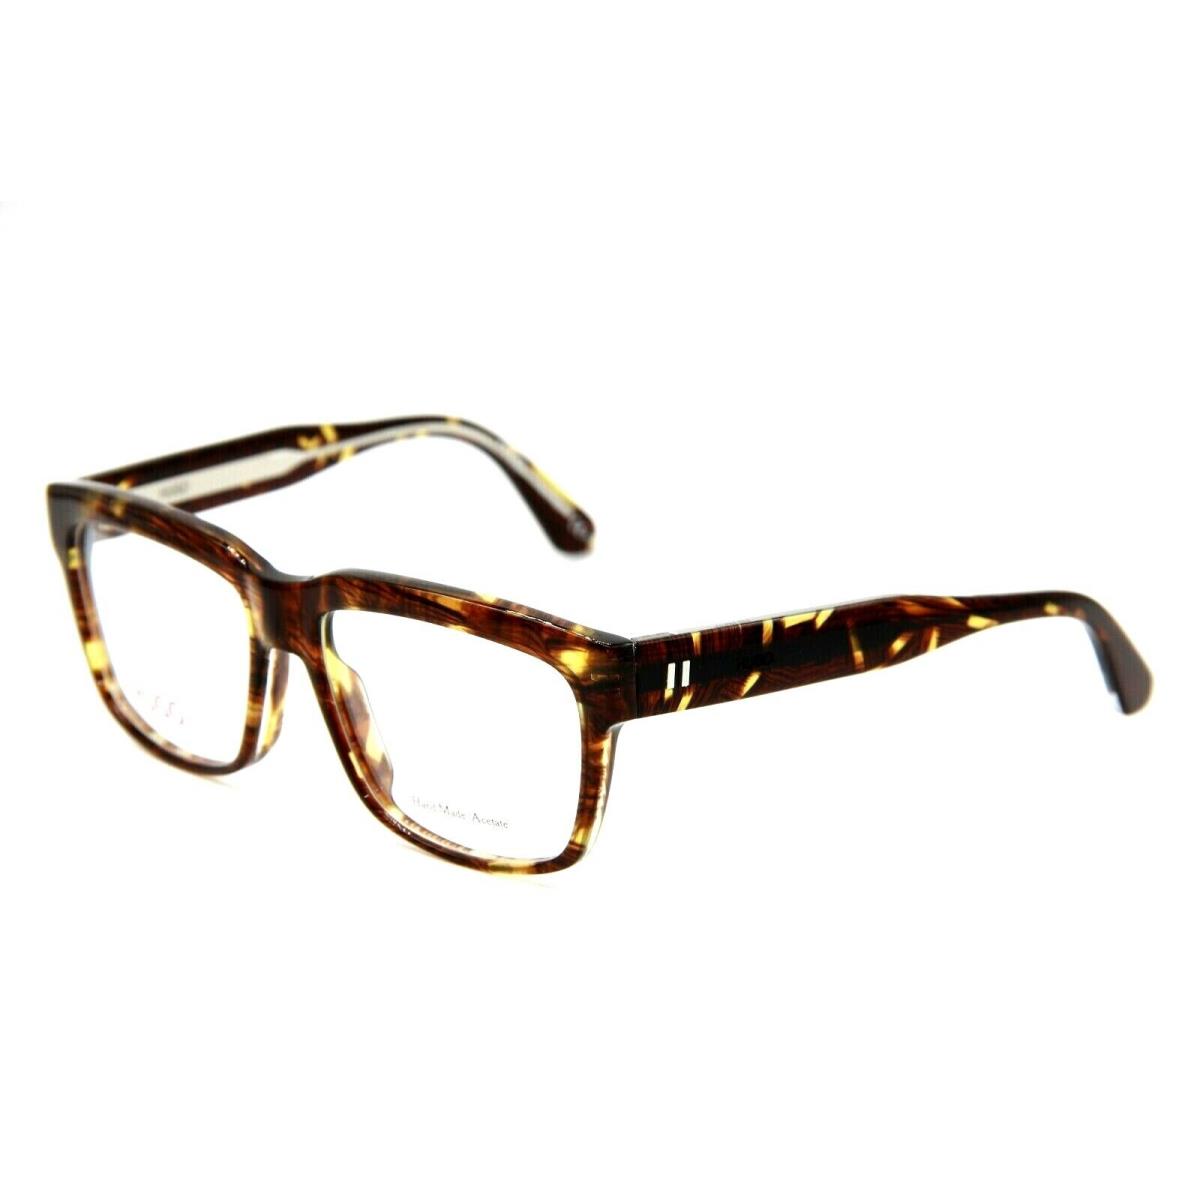 Hugo Boss 0129 Jiq Brown Eyeglasses Frames RX 55-16